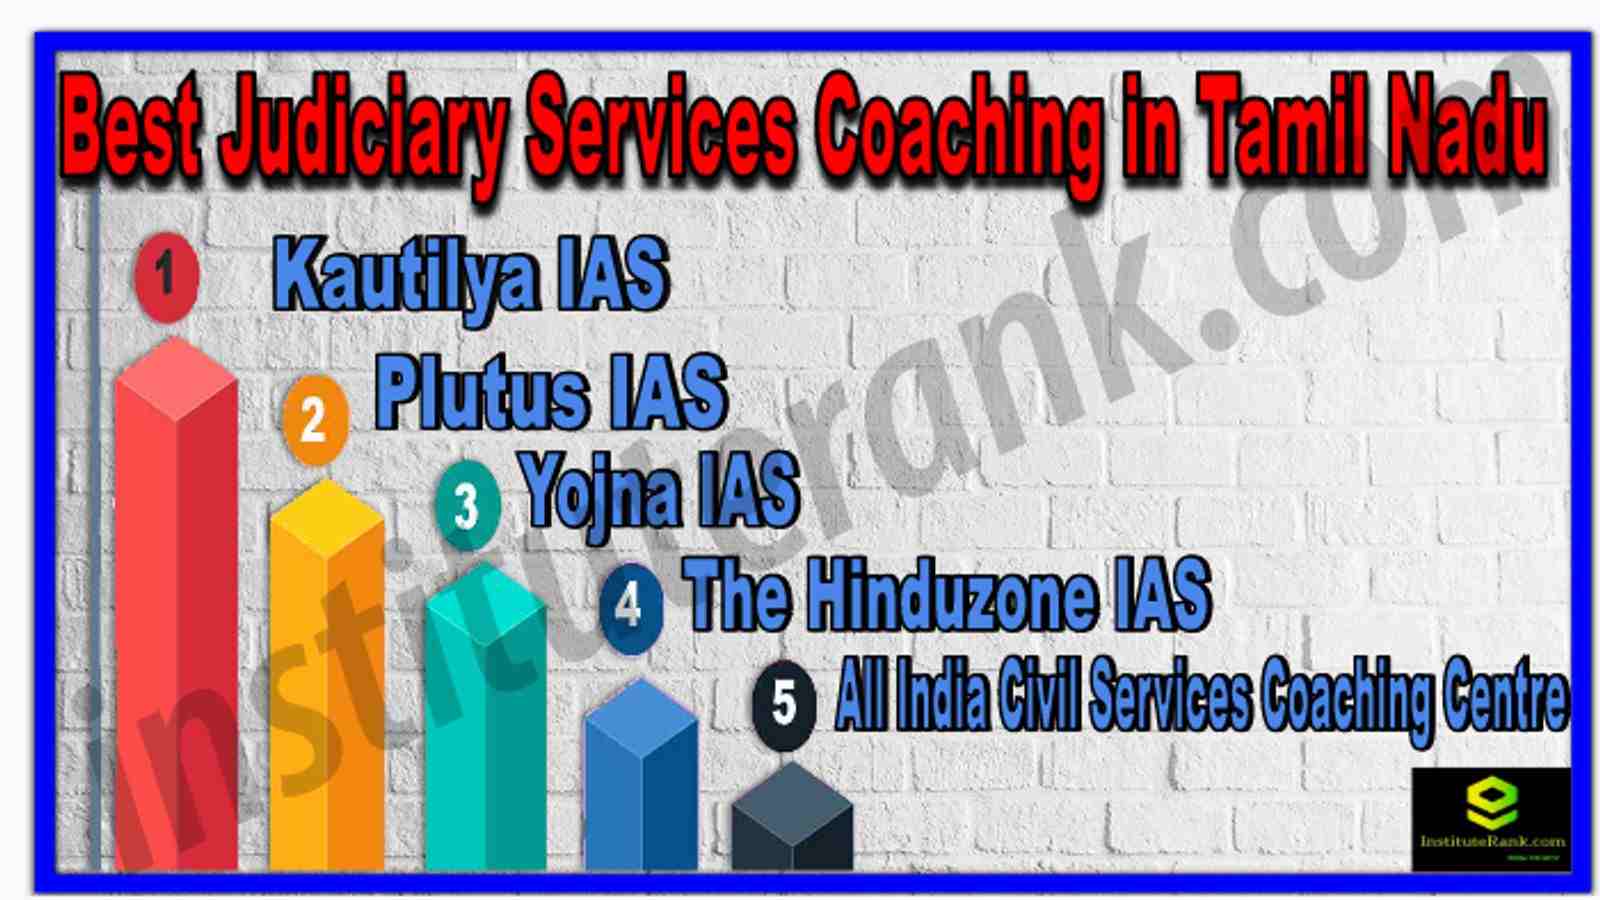 Best 10 Judiciary Services Coaching in Tamil Nadu